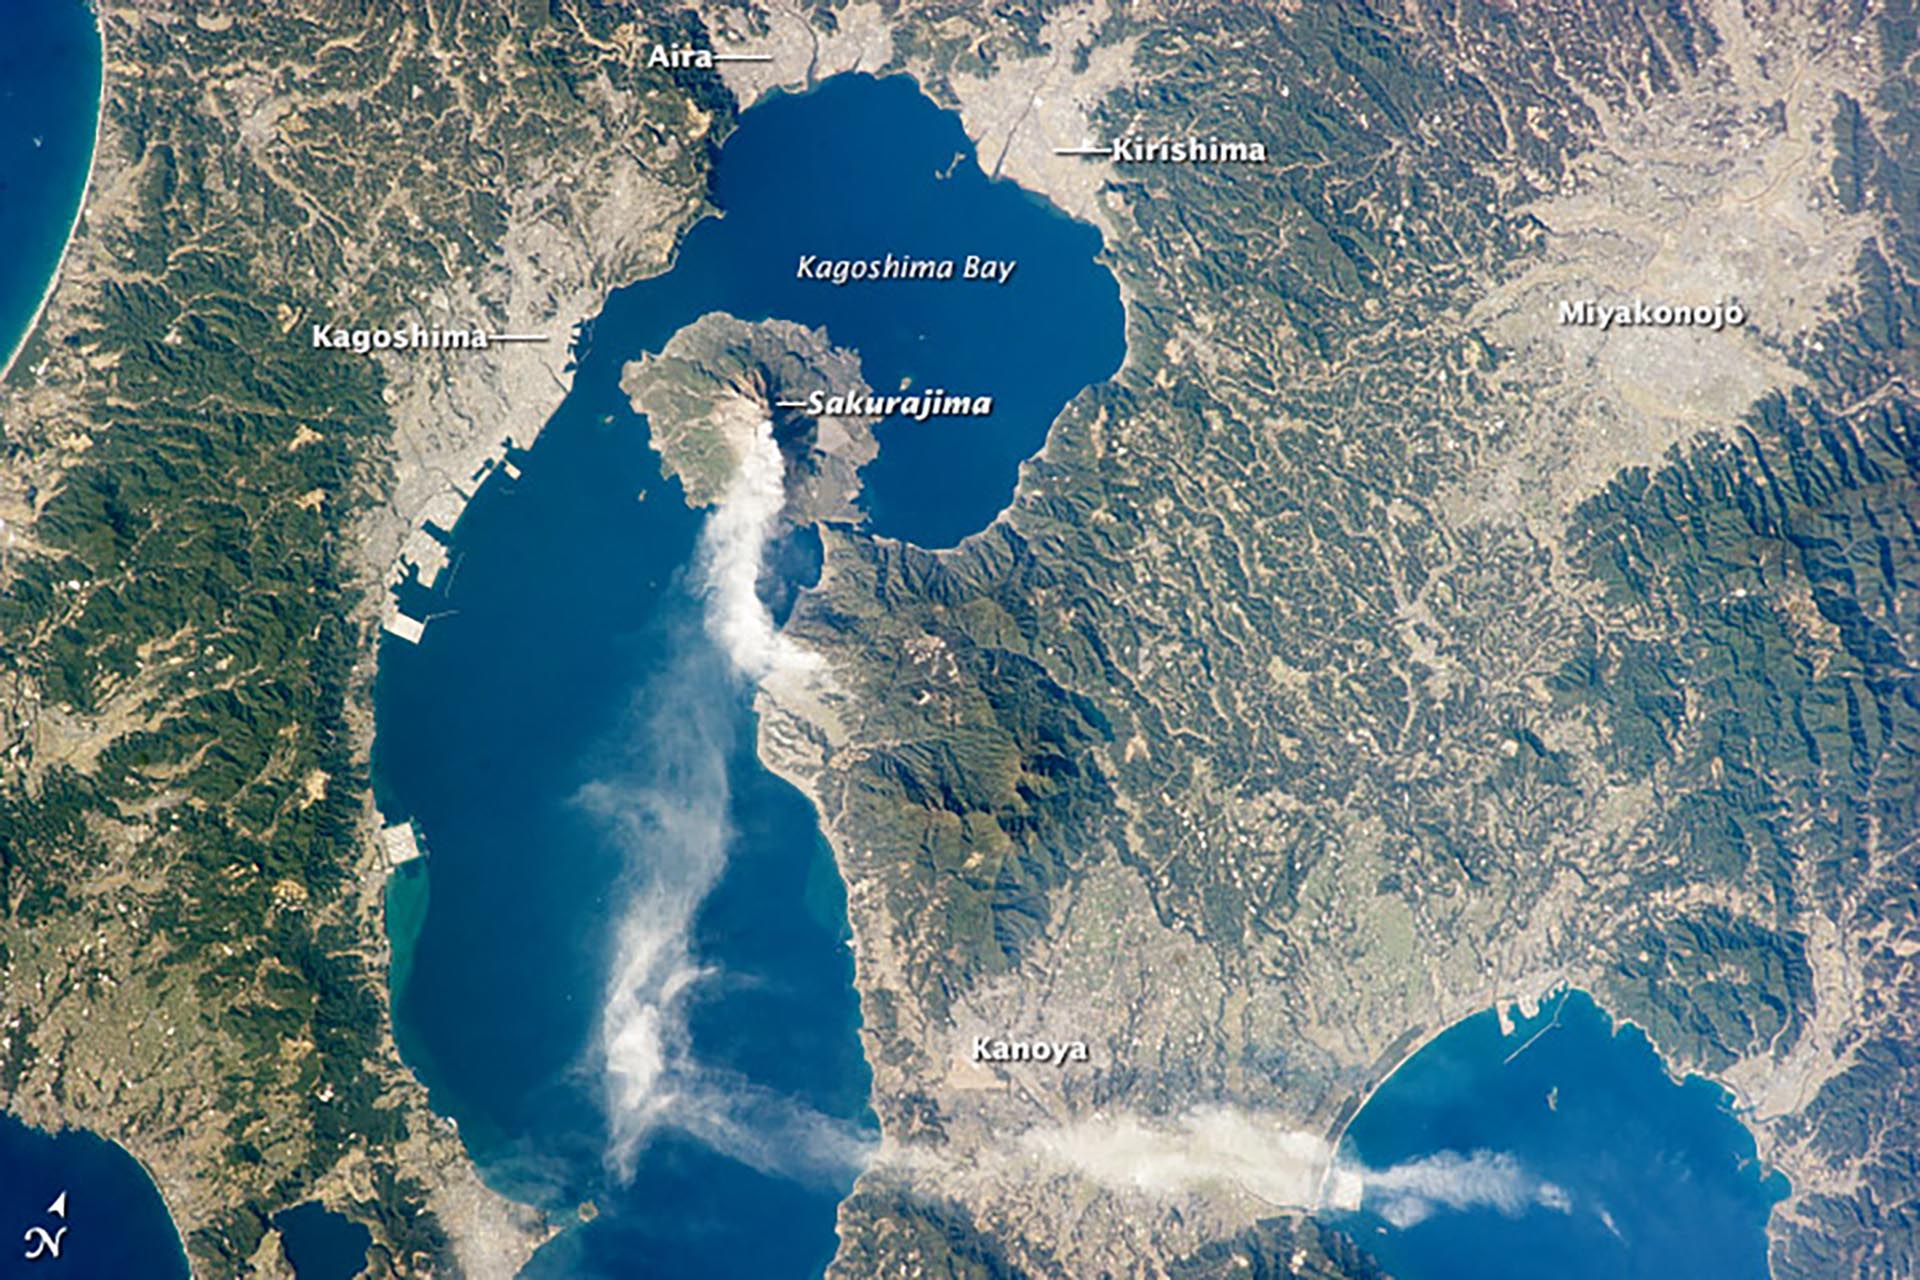 Satellite image of the cloud of smoke released by the activity of Sakurajima.